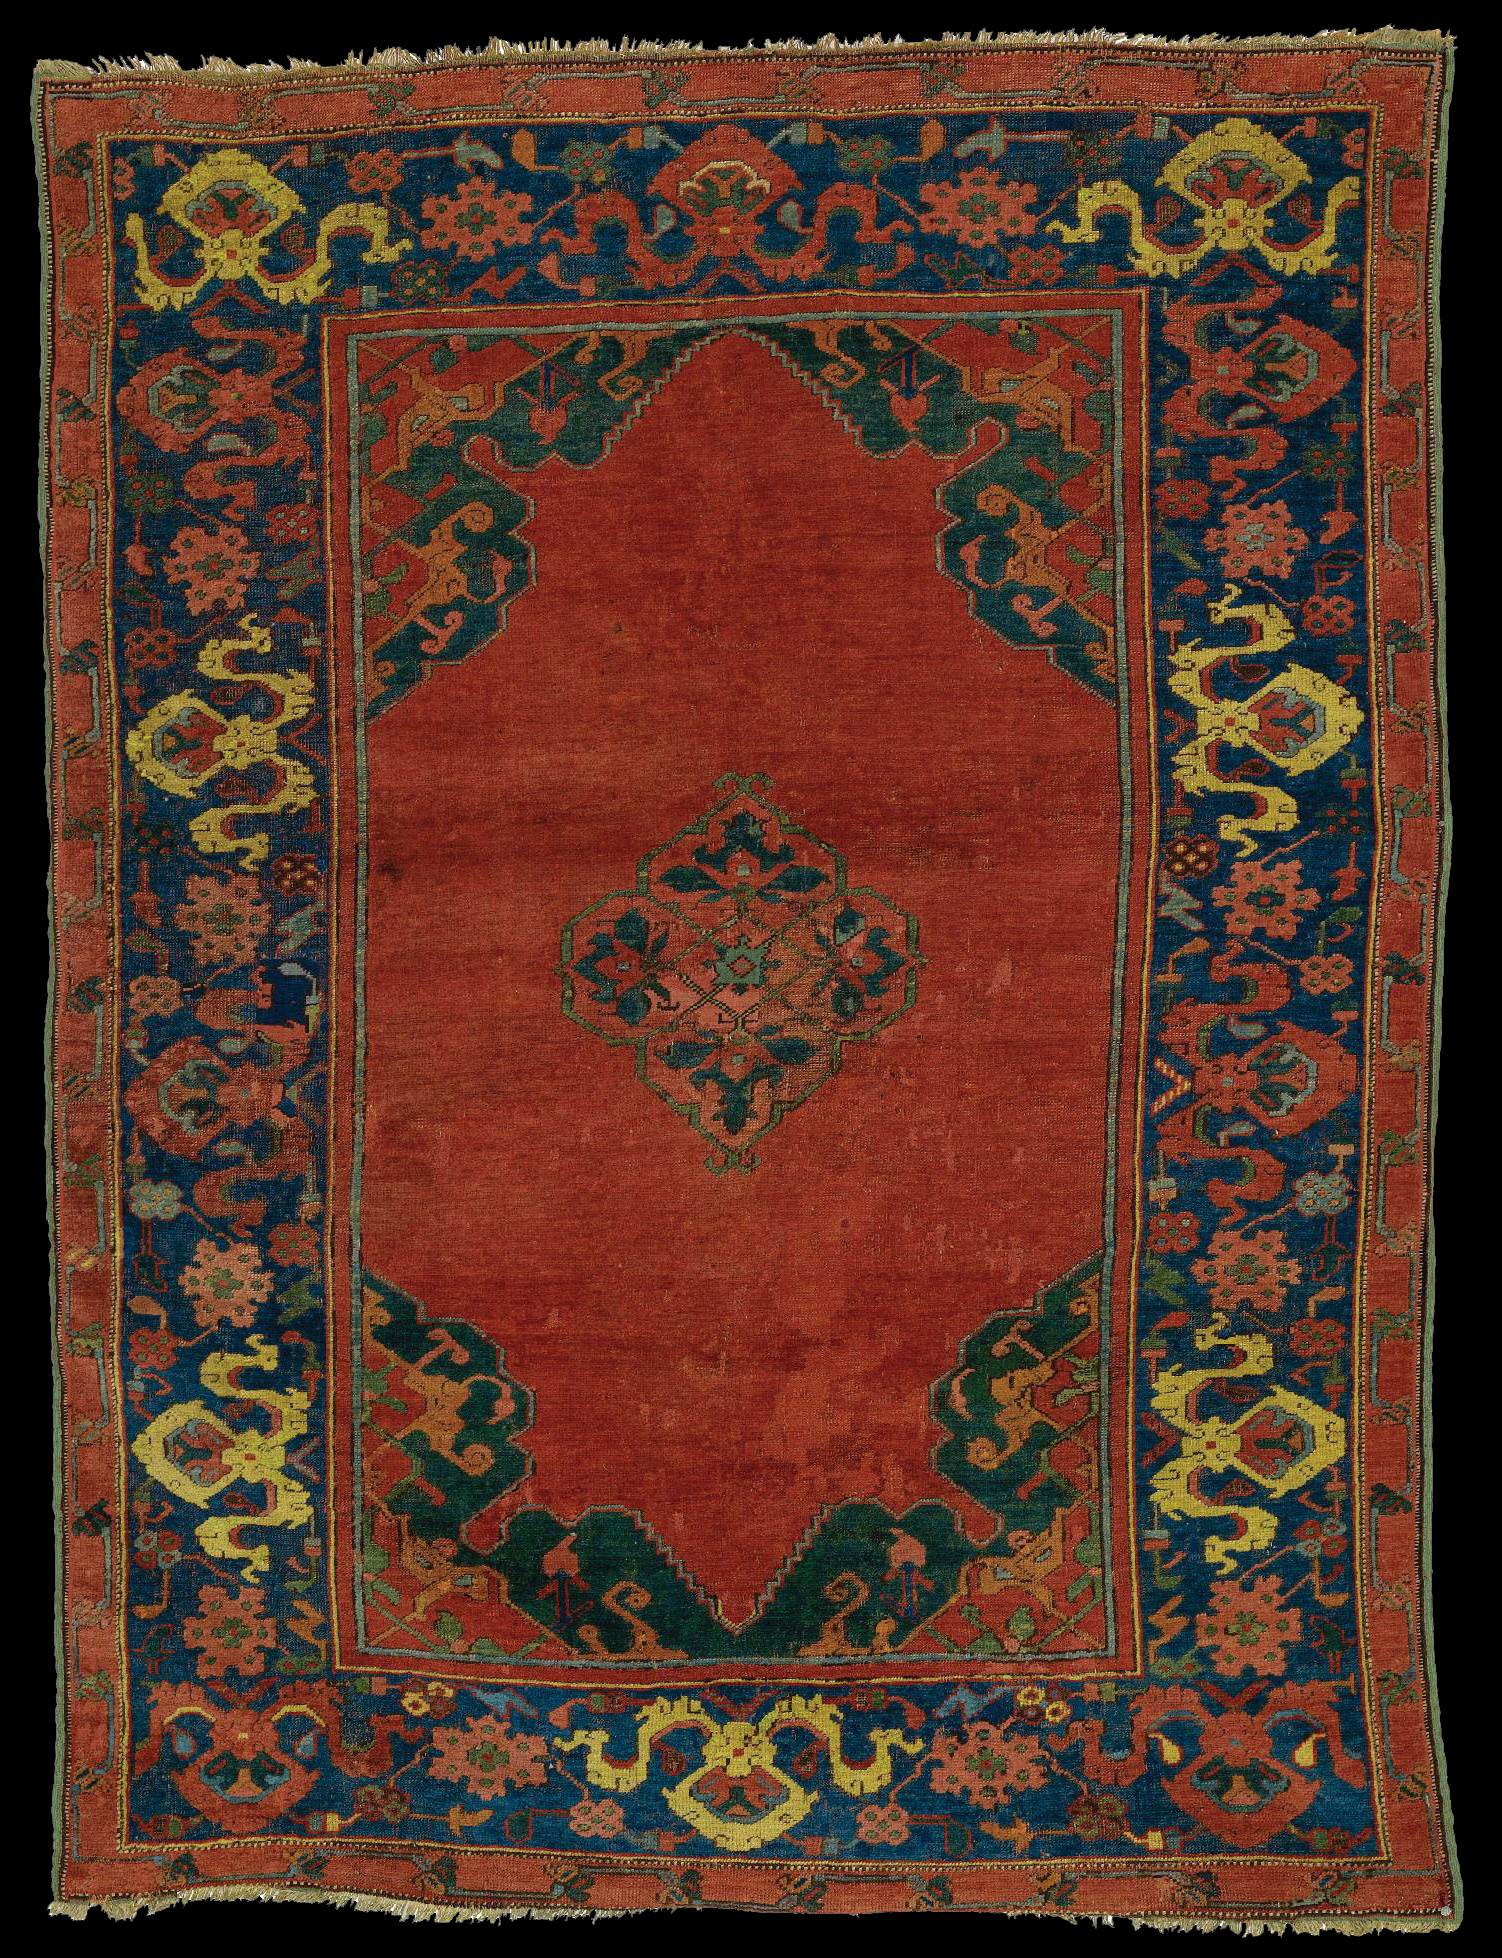 Ushak carpet, prayer size, 17th century